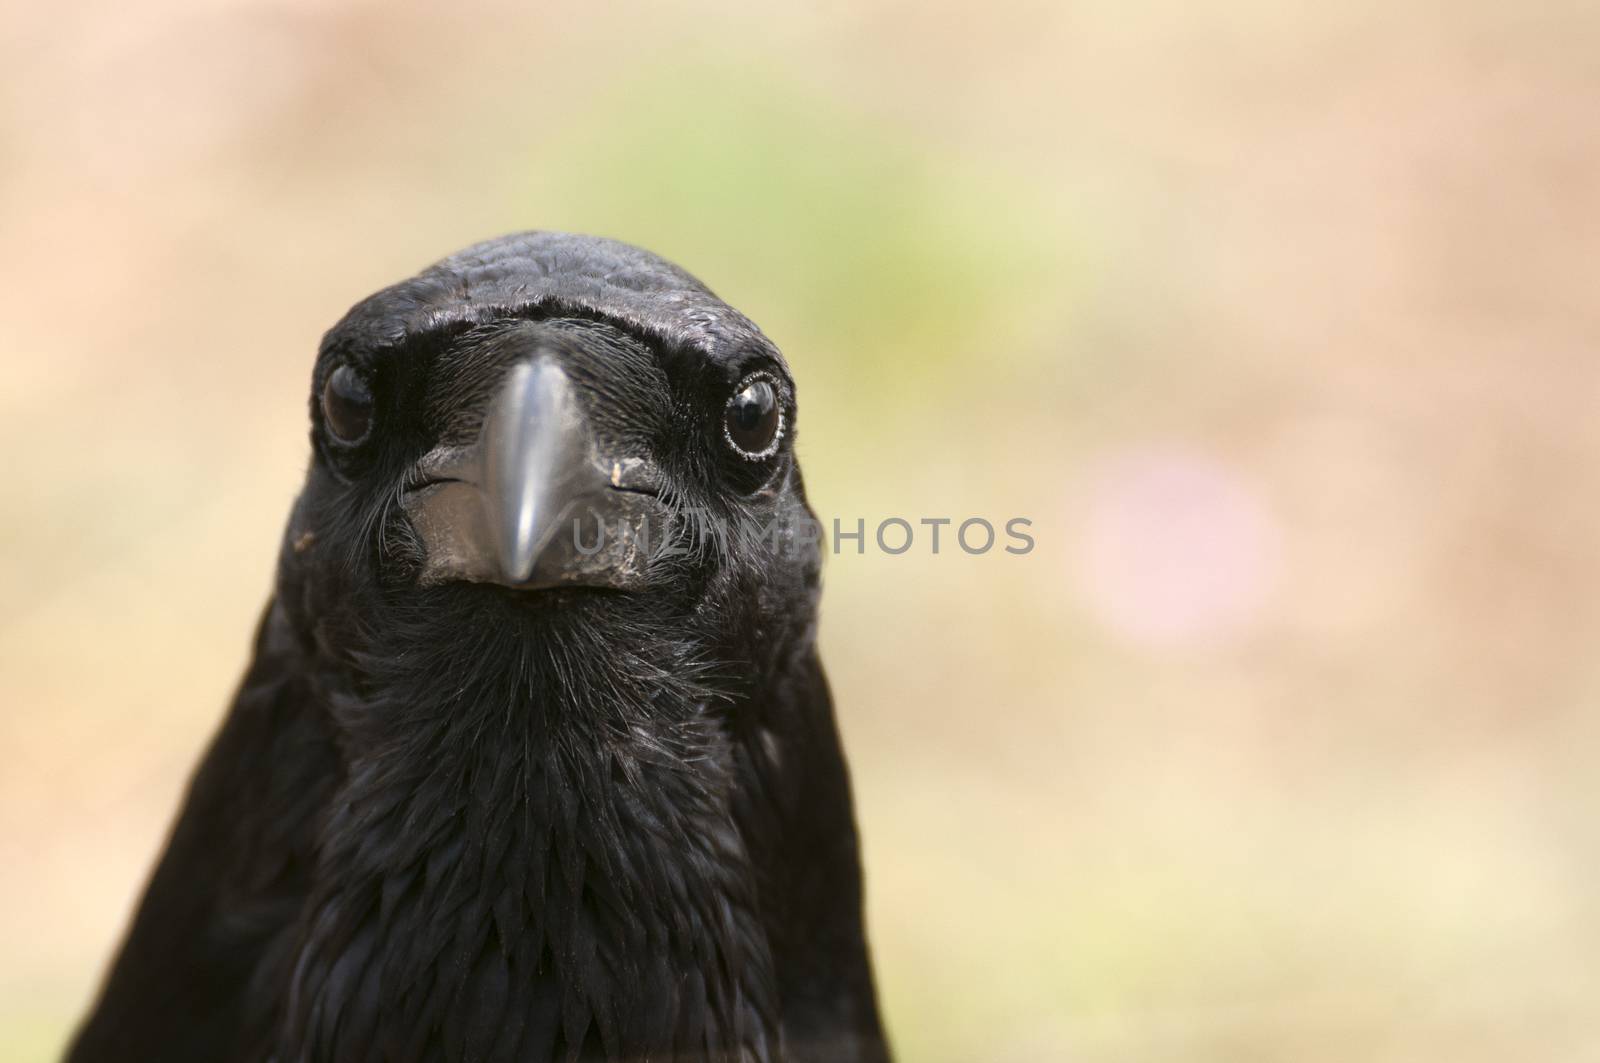 Raven - Corvus corax, Portrait of eyes, head and beak by jalonsohu@gmail.com